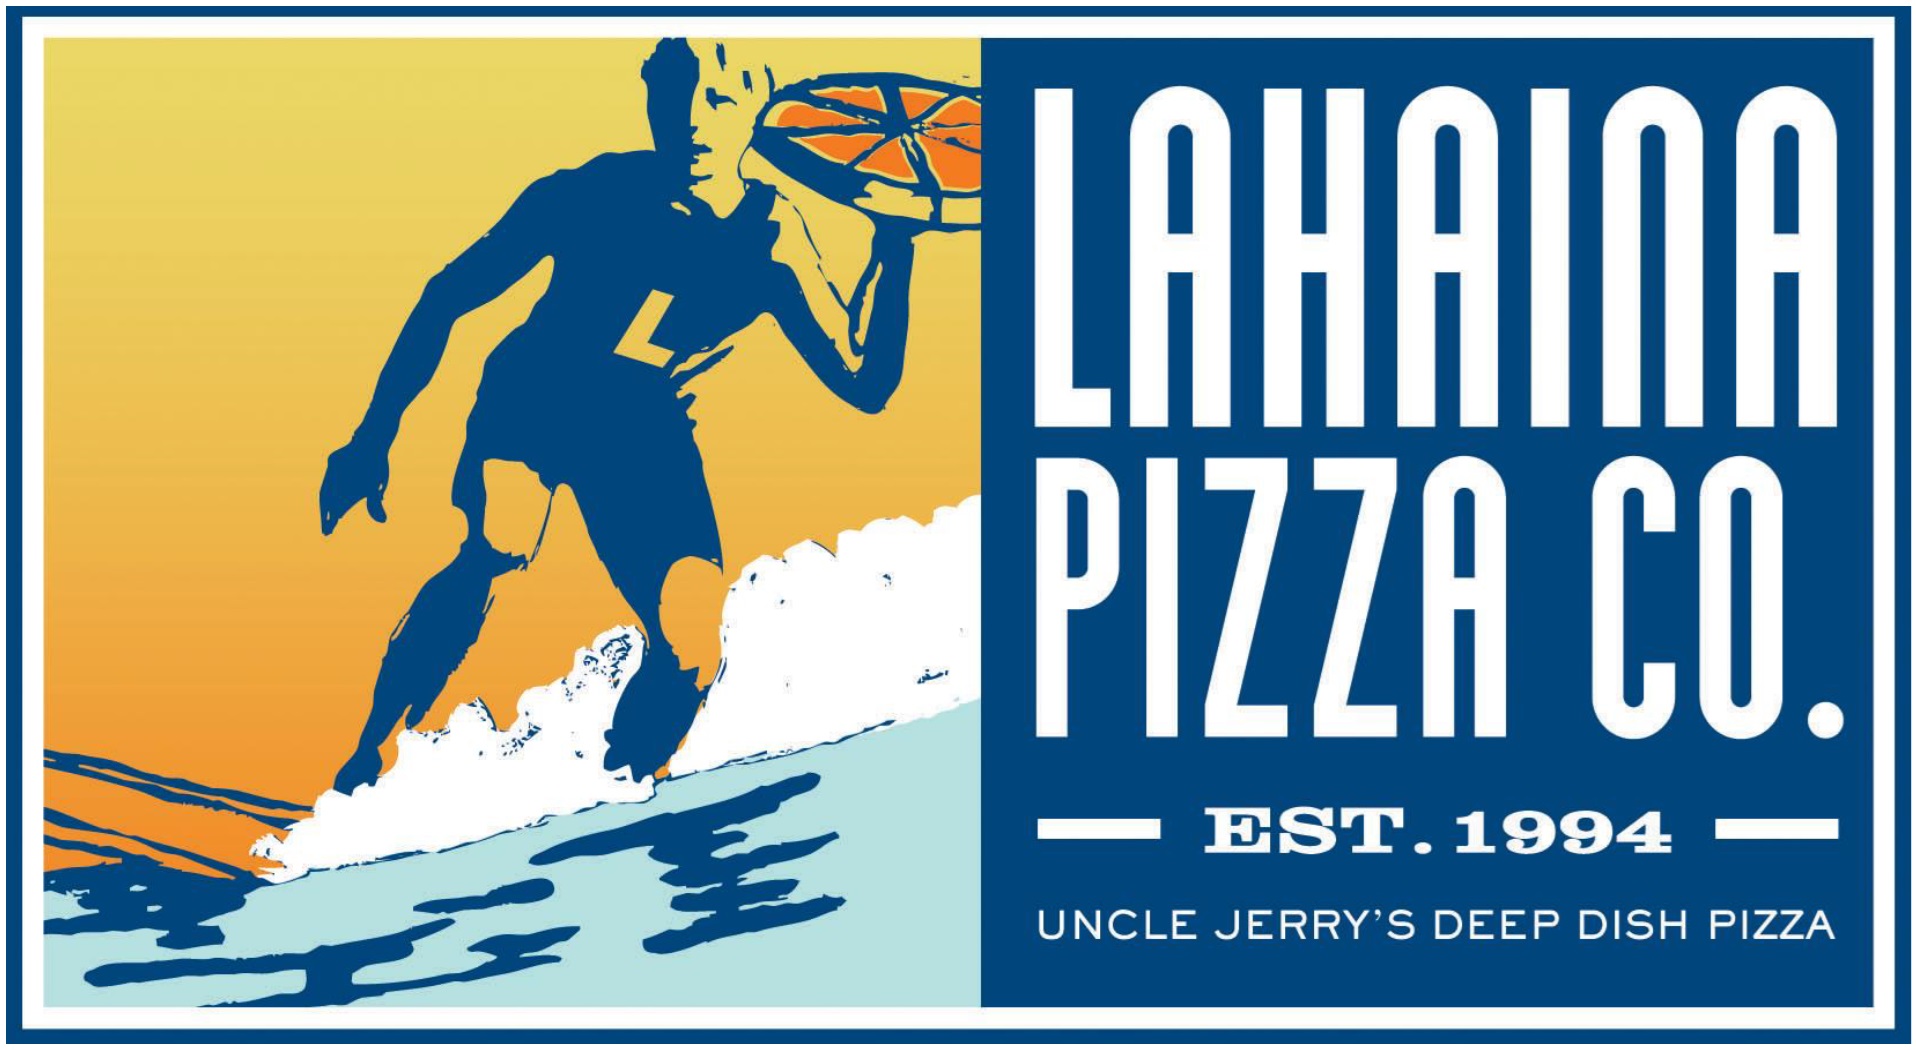 image of Lahaina pizza co. sponsor logo